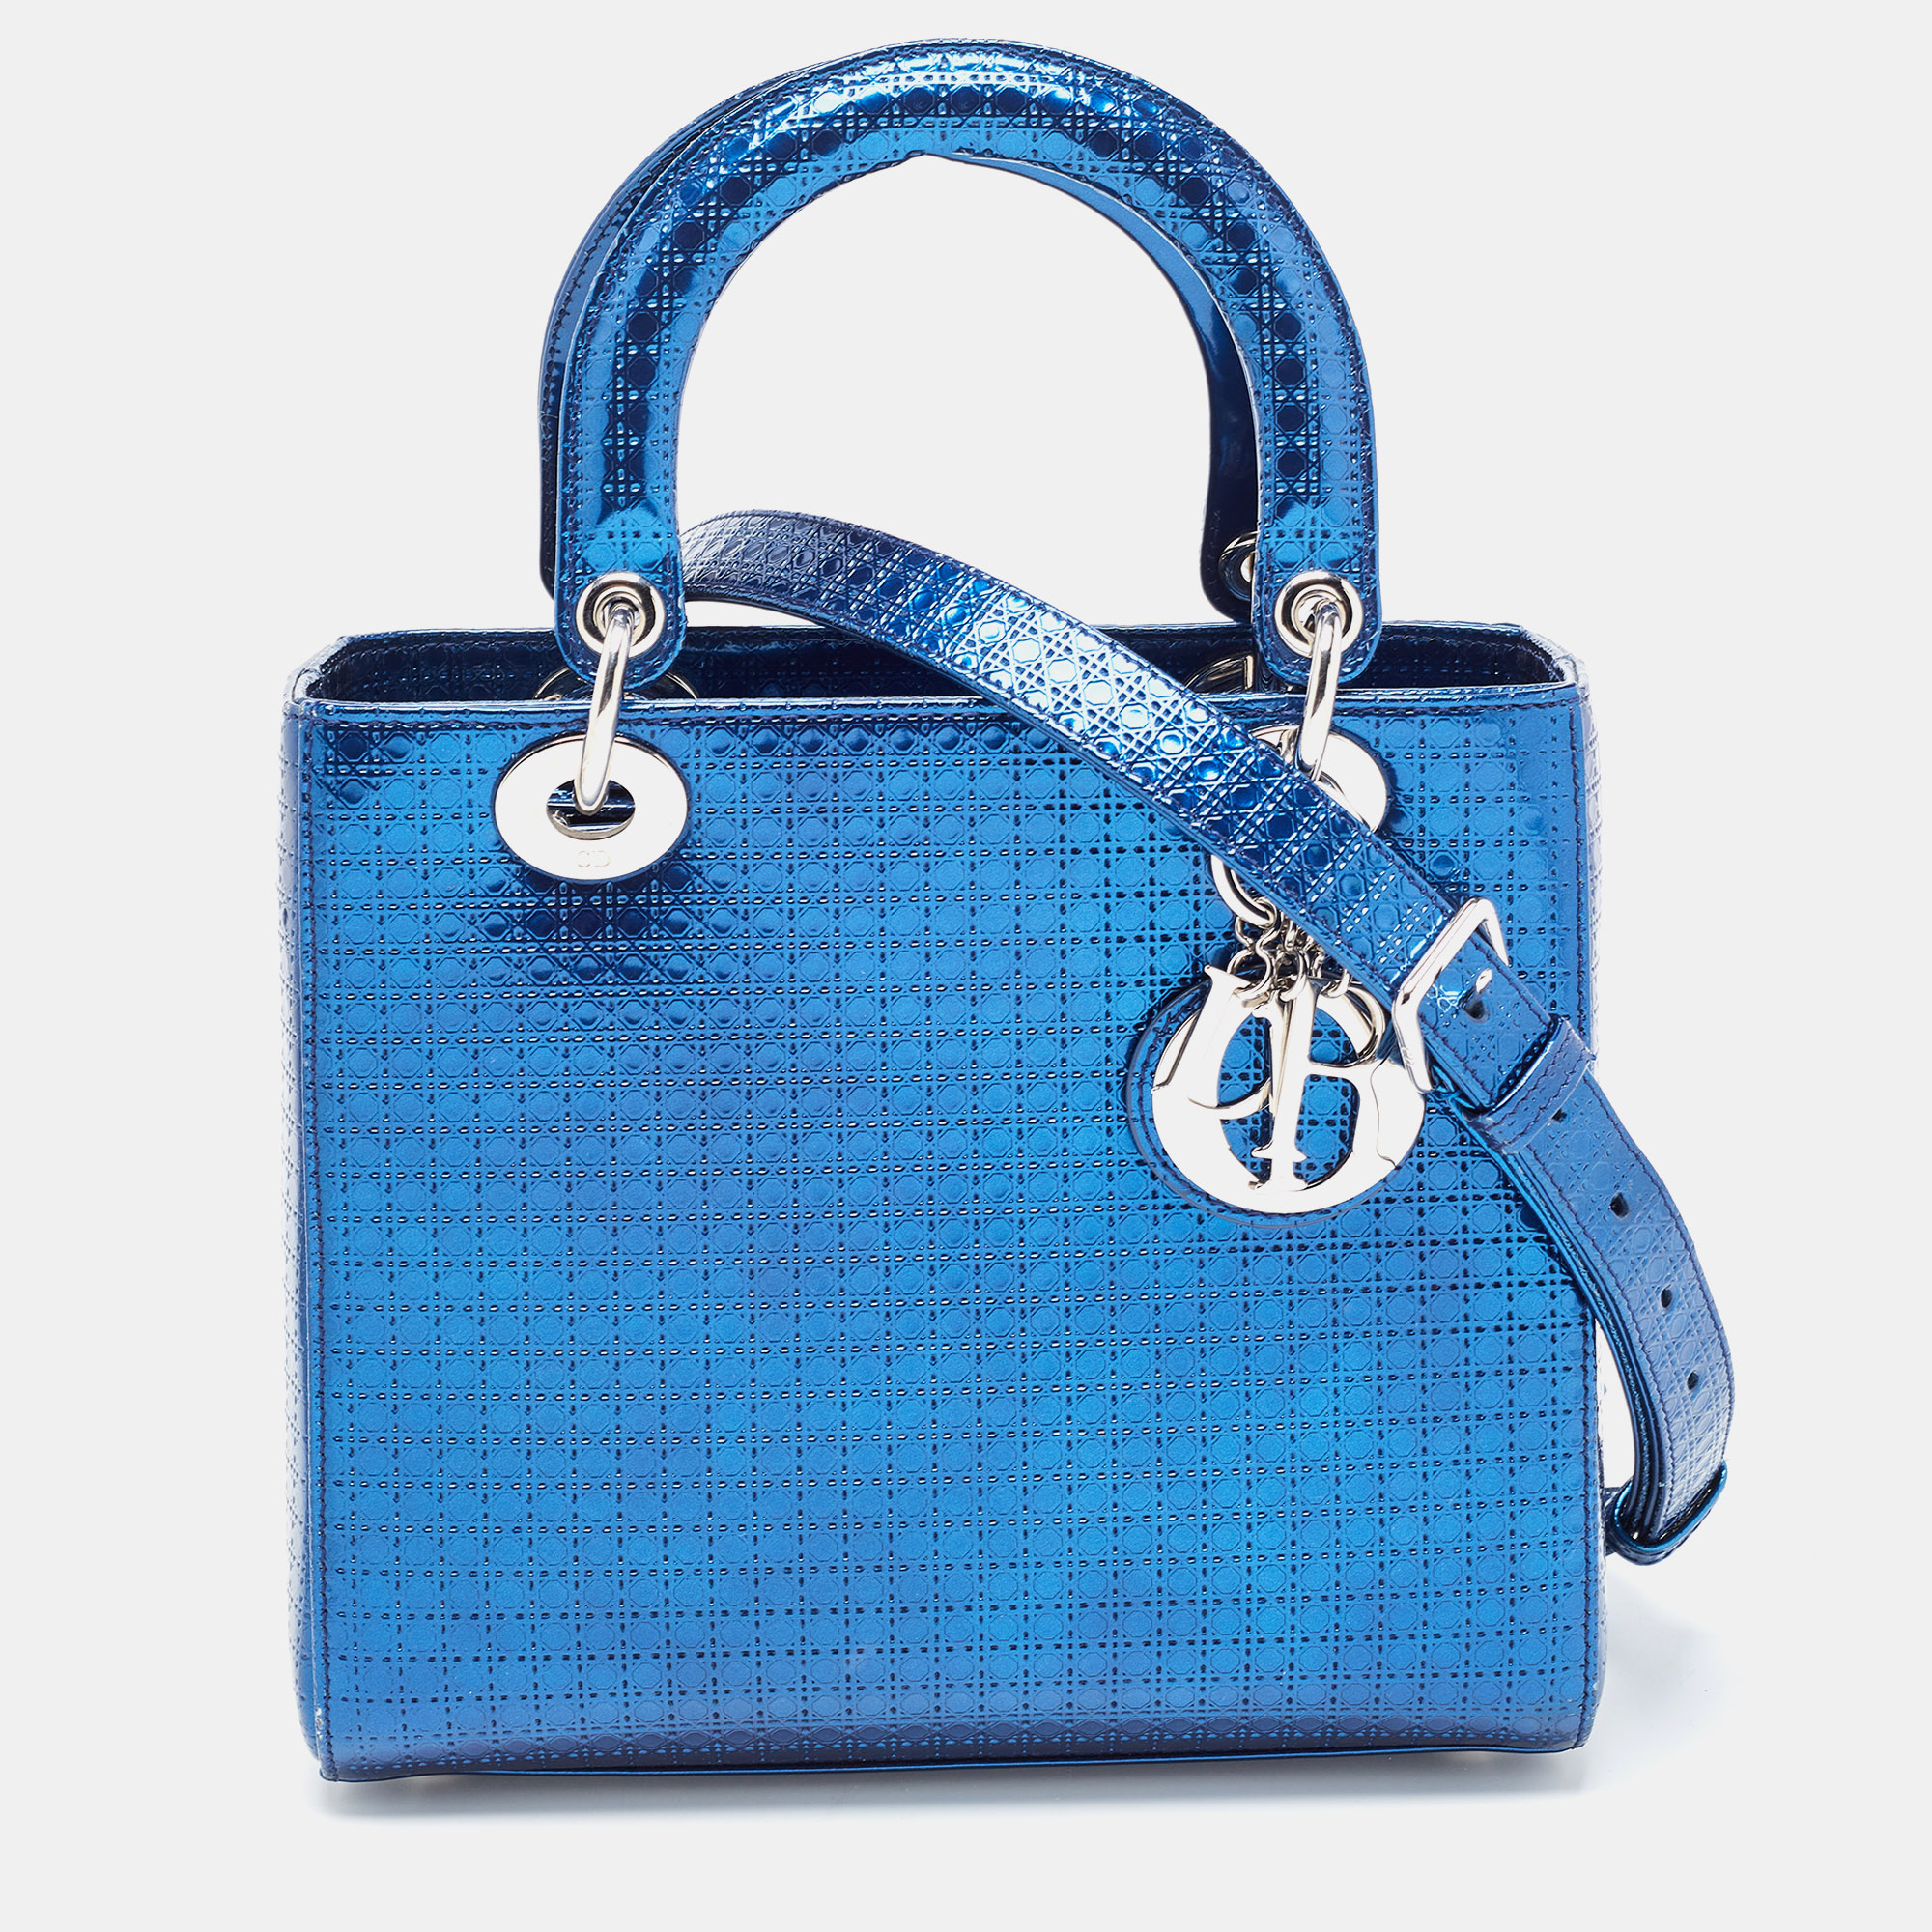 Dior Metallic Blue Microcannage Patent Leather Medium Lady Dior Tote